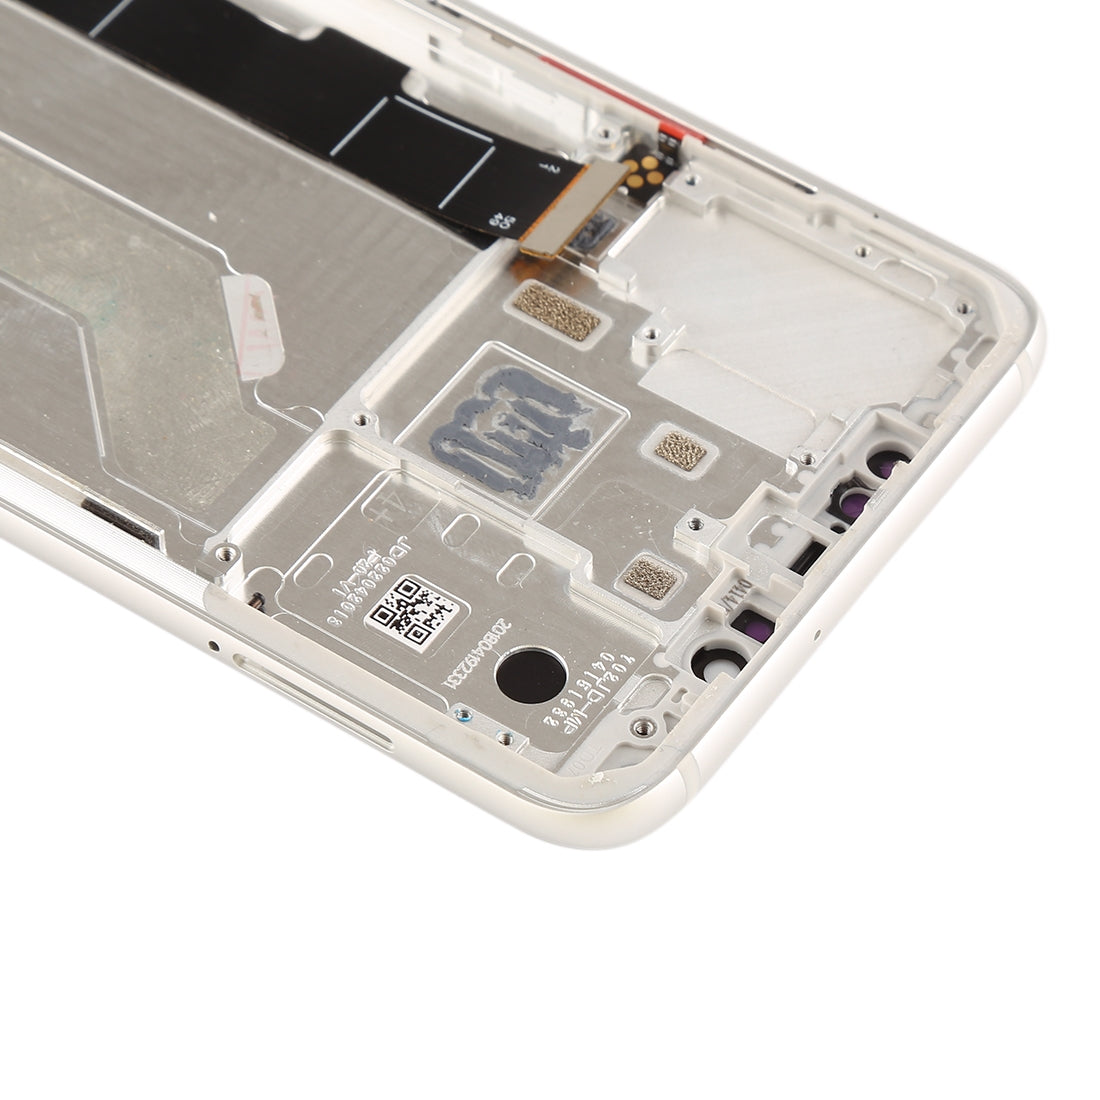 Ecran Complet LCD + Tactile + Châssis Xiaomi MI 8 Argent